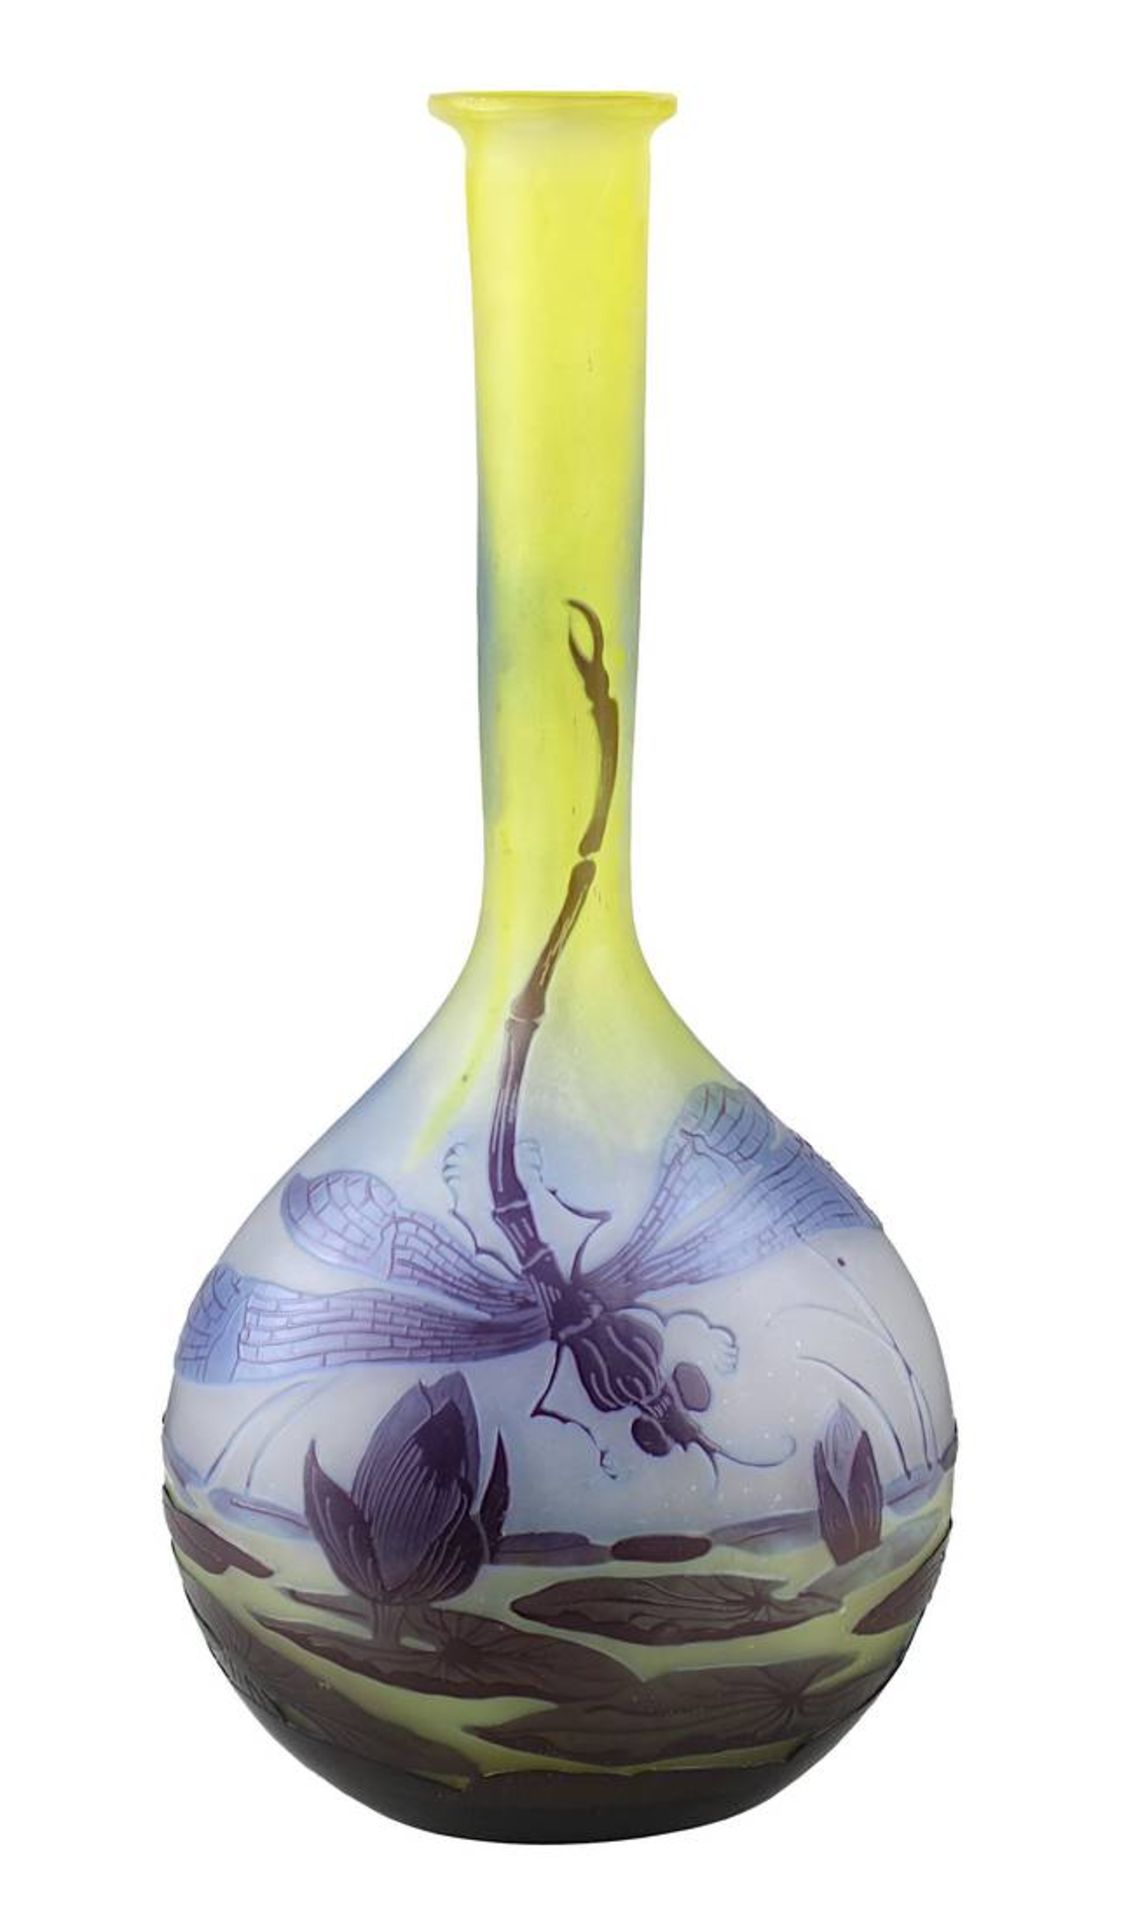 Gallé - Jugendstilvase Libelle, Nancy, 1904-06, Soliflor-Vase, leicht flachgedrückter Vasenbauch mit